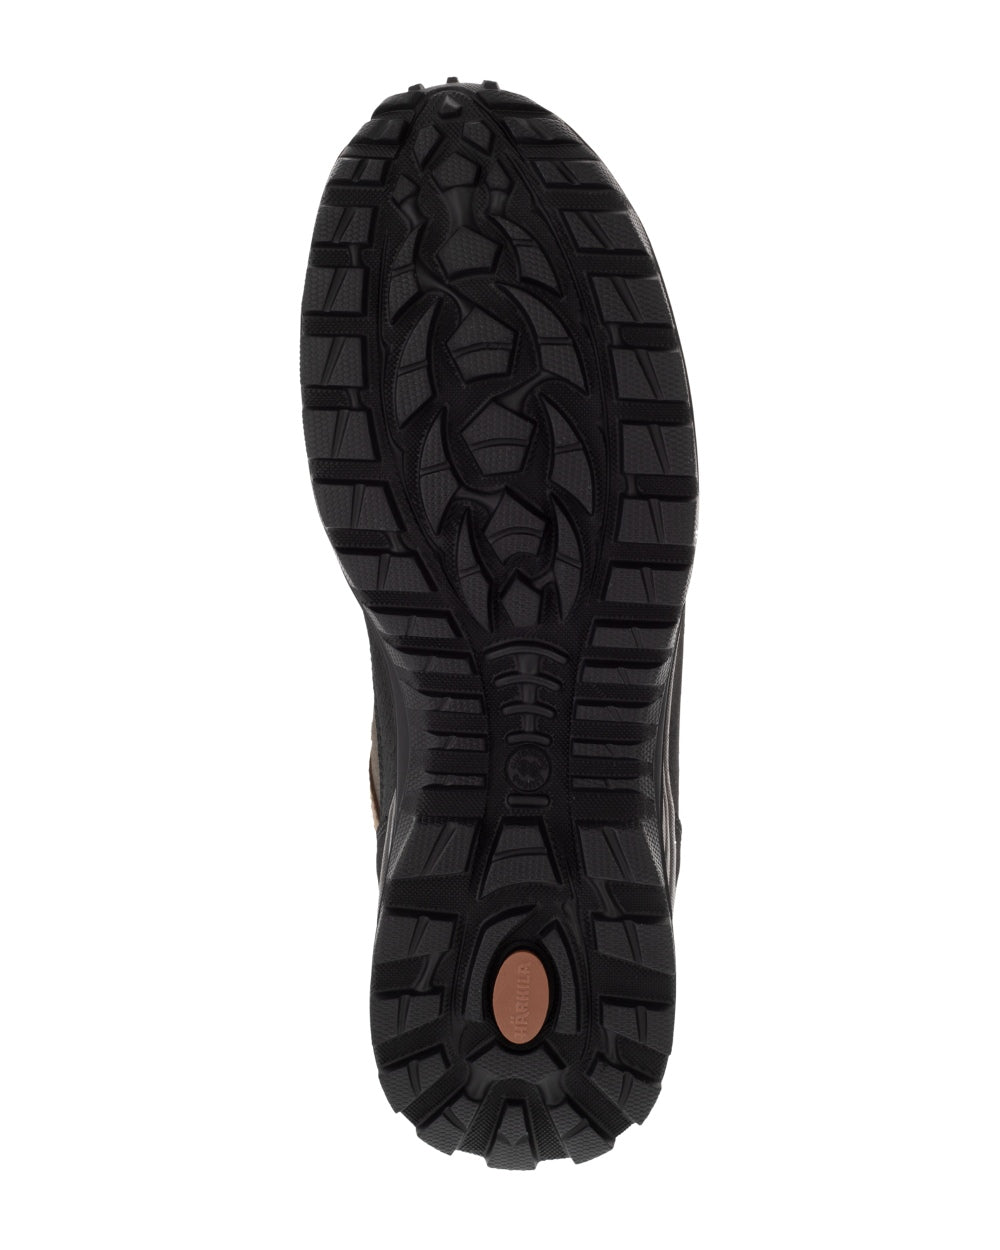 Harkila Atammik GTX Waterproof Boots in Dark Brown